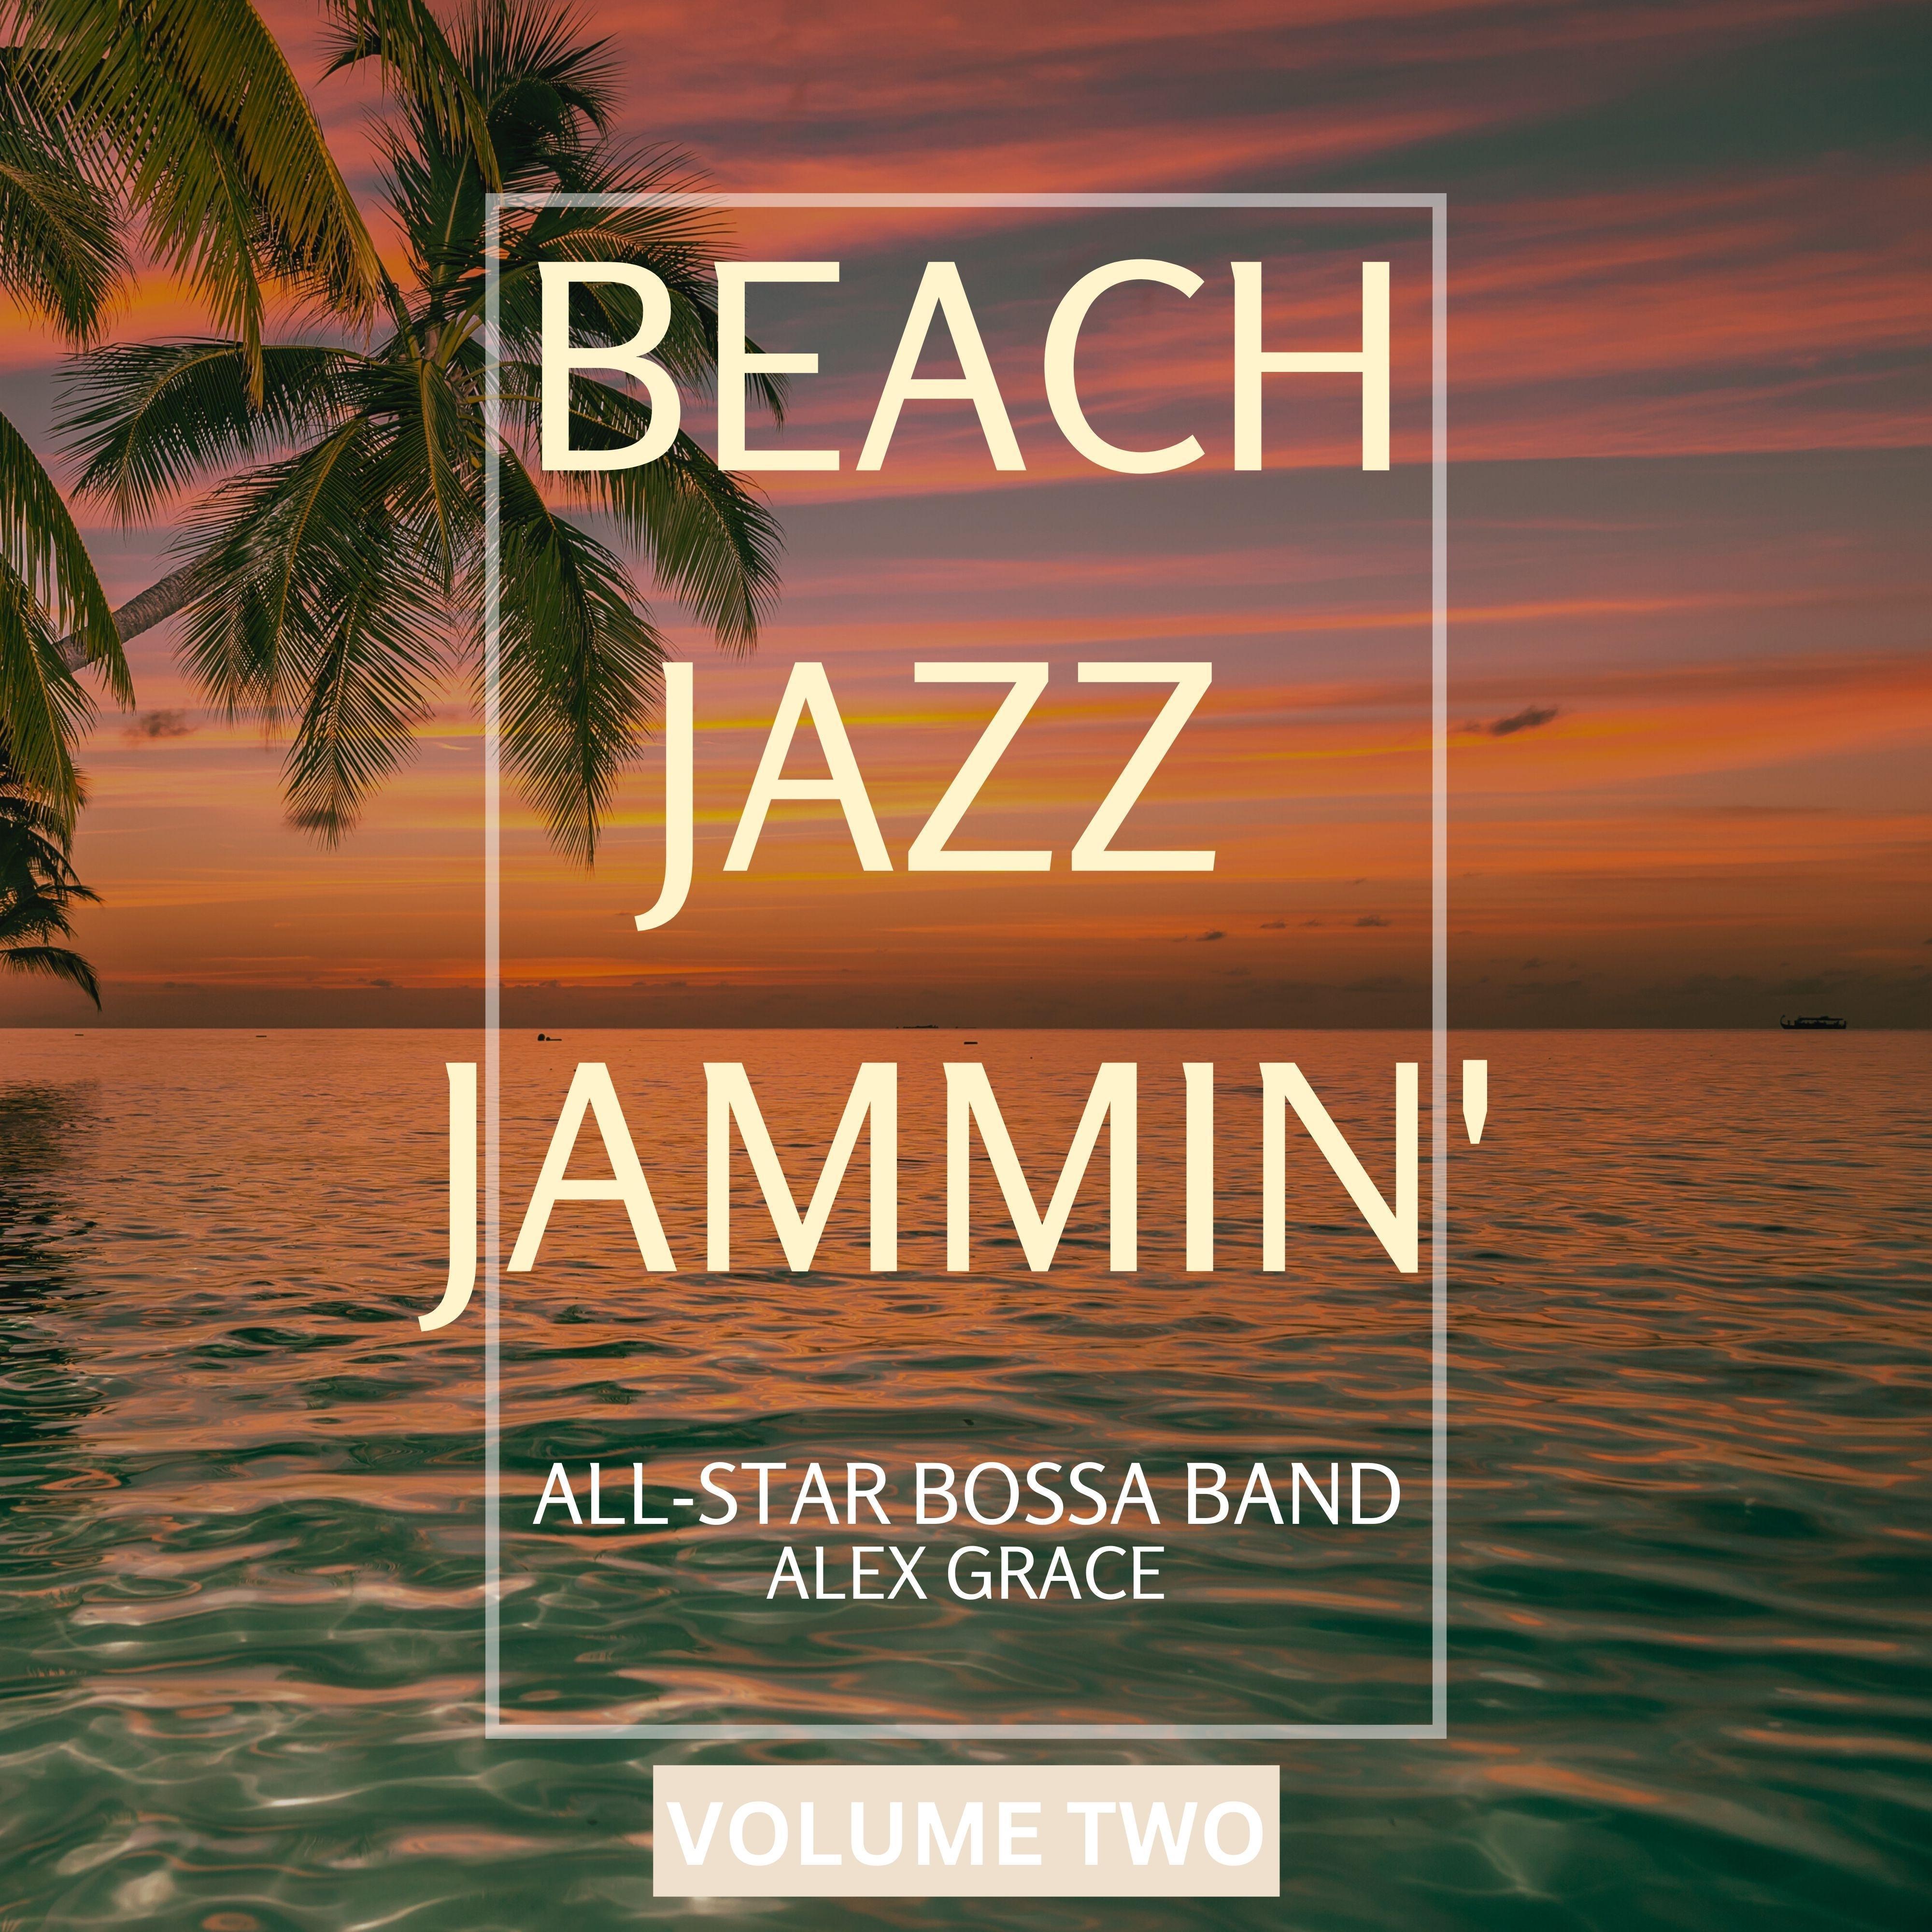 All-Star Bossa Band - Golden Sands Serenity